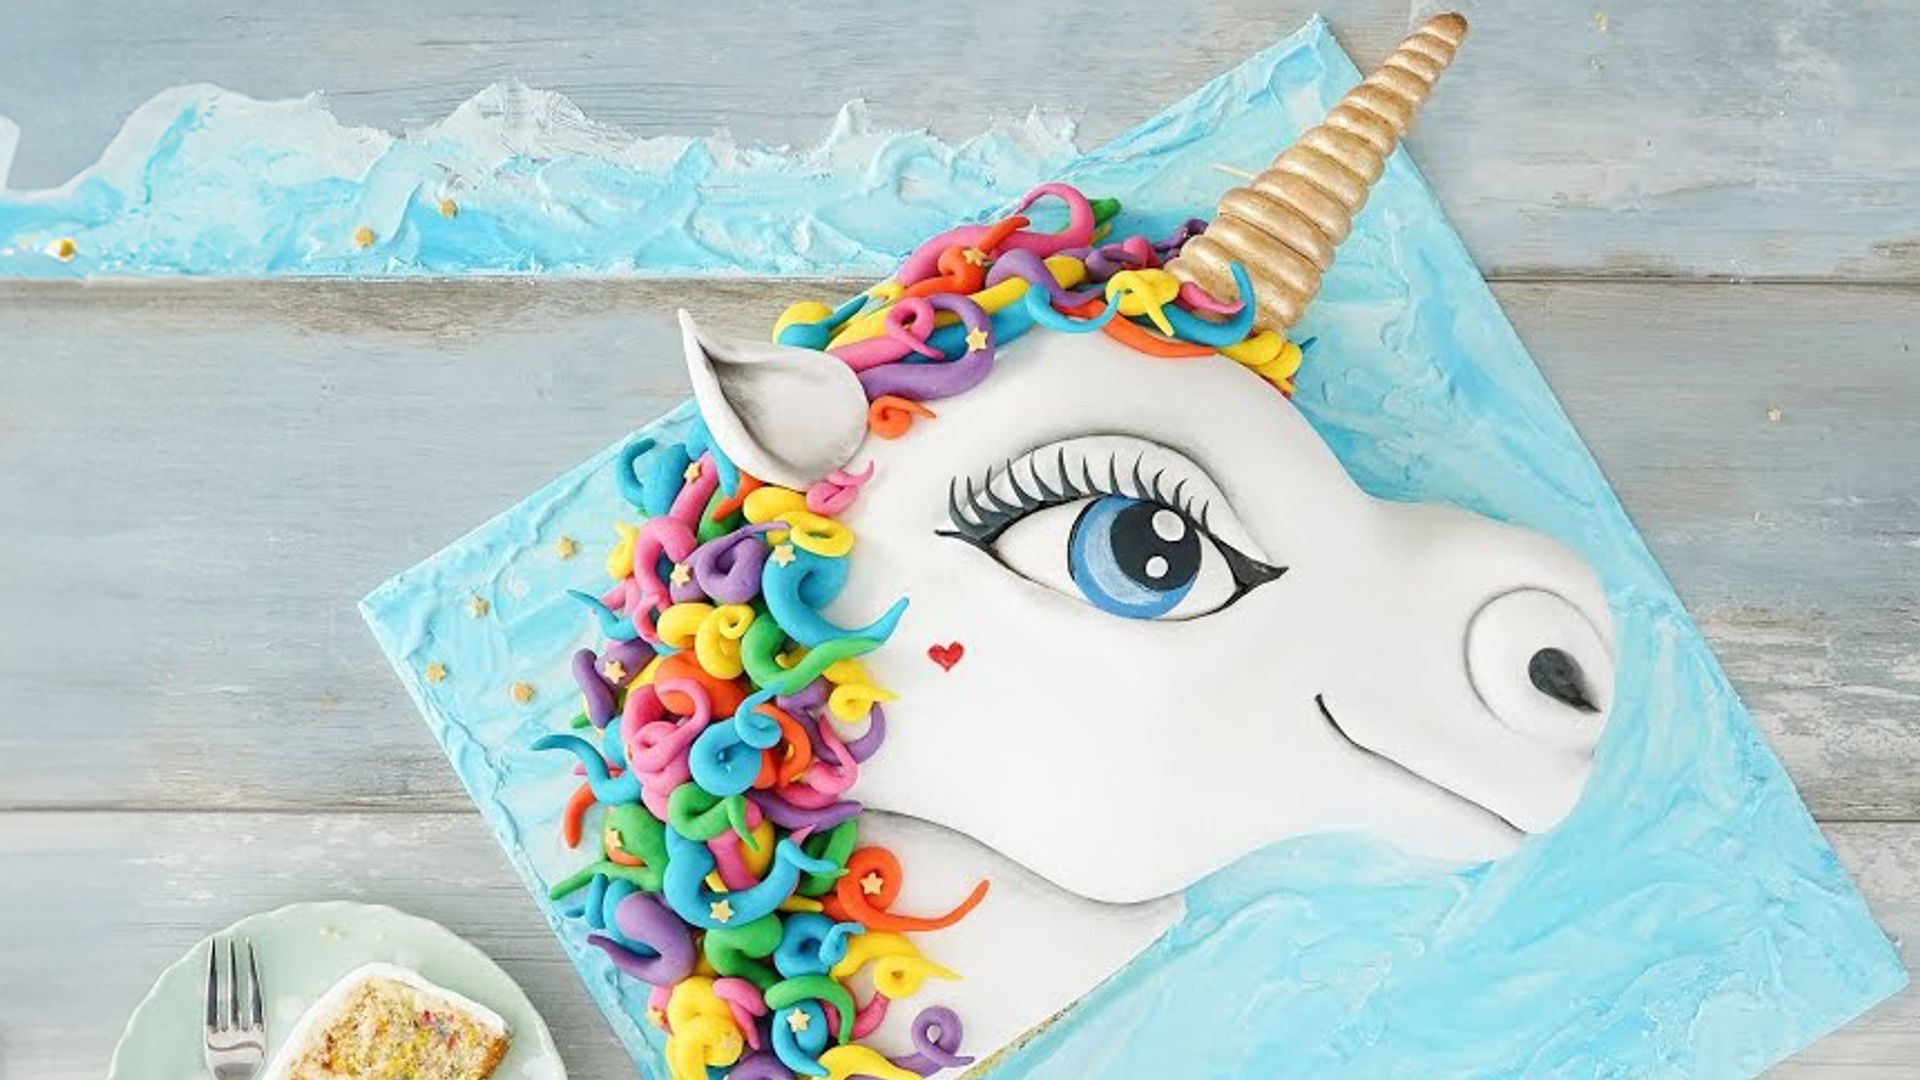 EINHORN 3D Torte / Unicorn Cake / Regenbogen Motivtorte